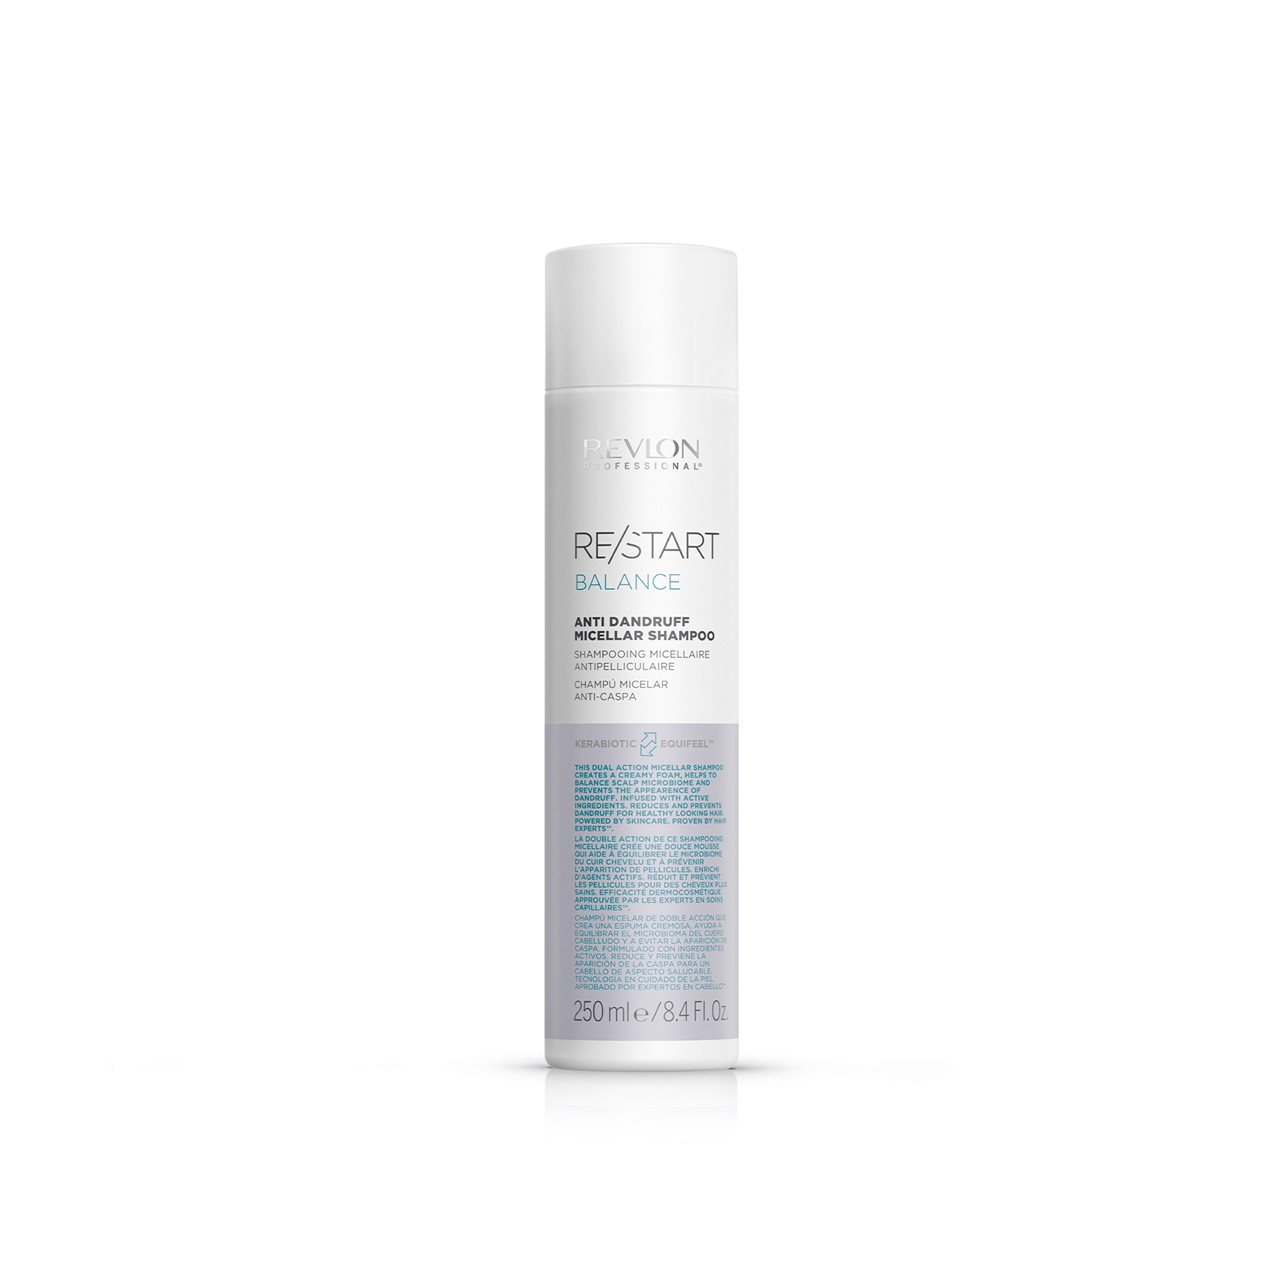 Revlon Professional Re/Start Balance Anti-Dandruff Shampoo 250ml